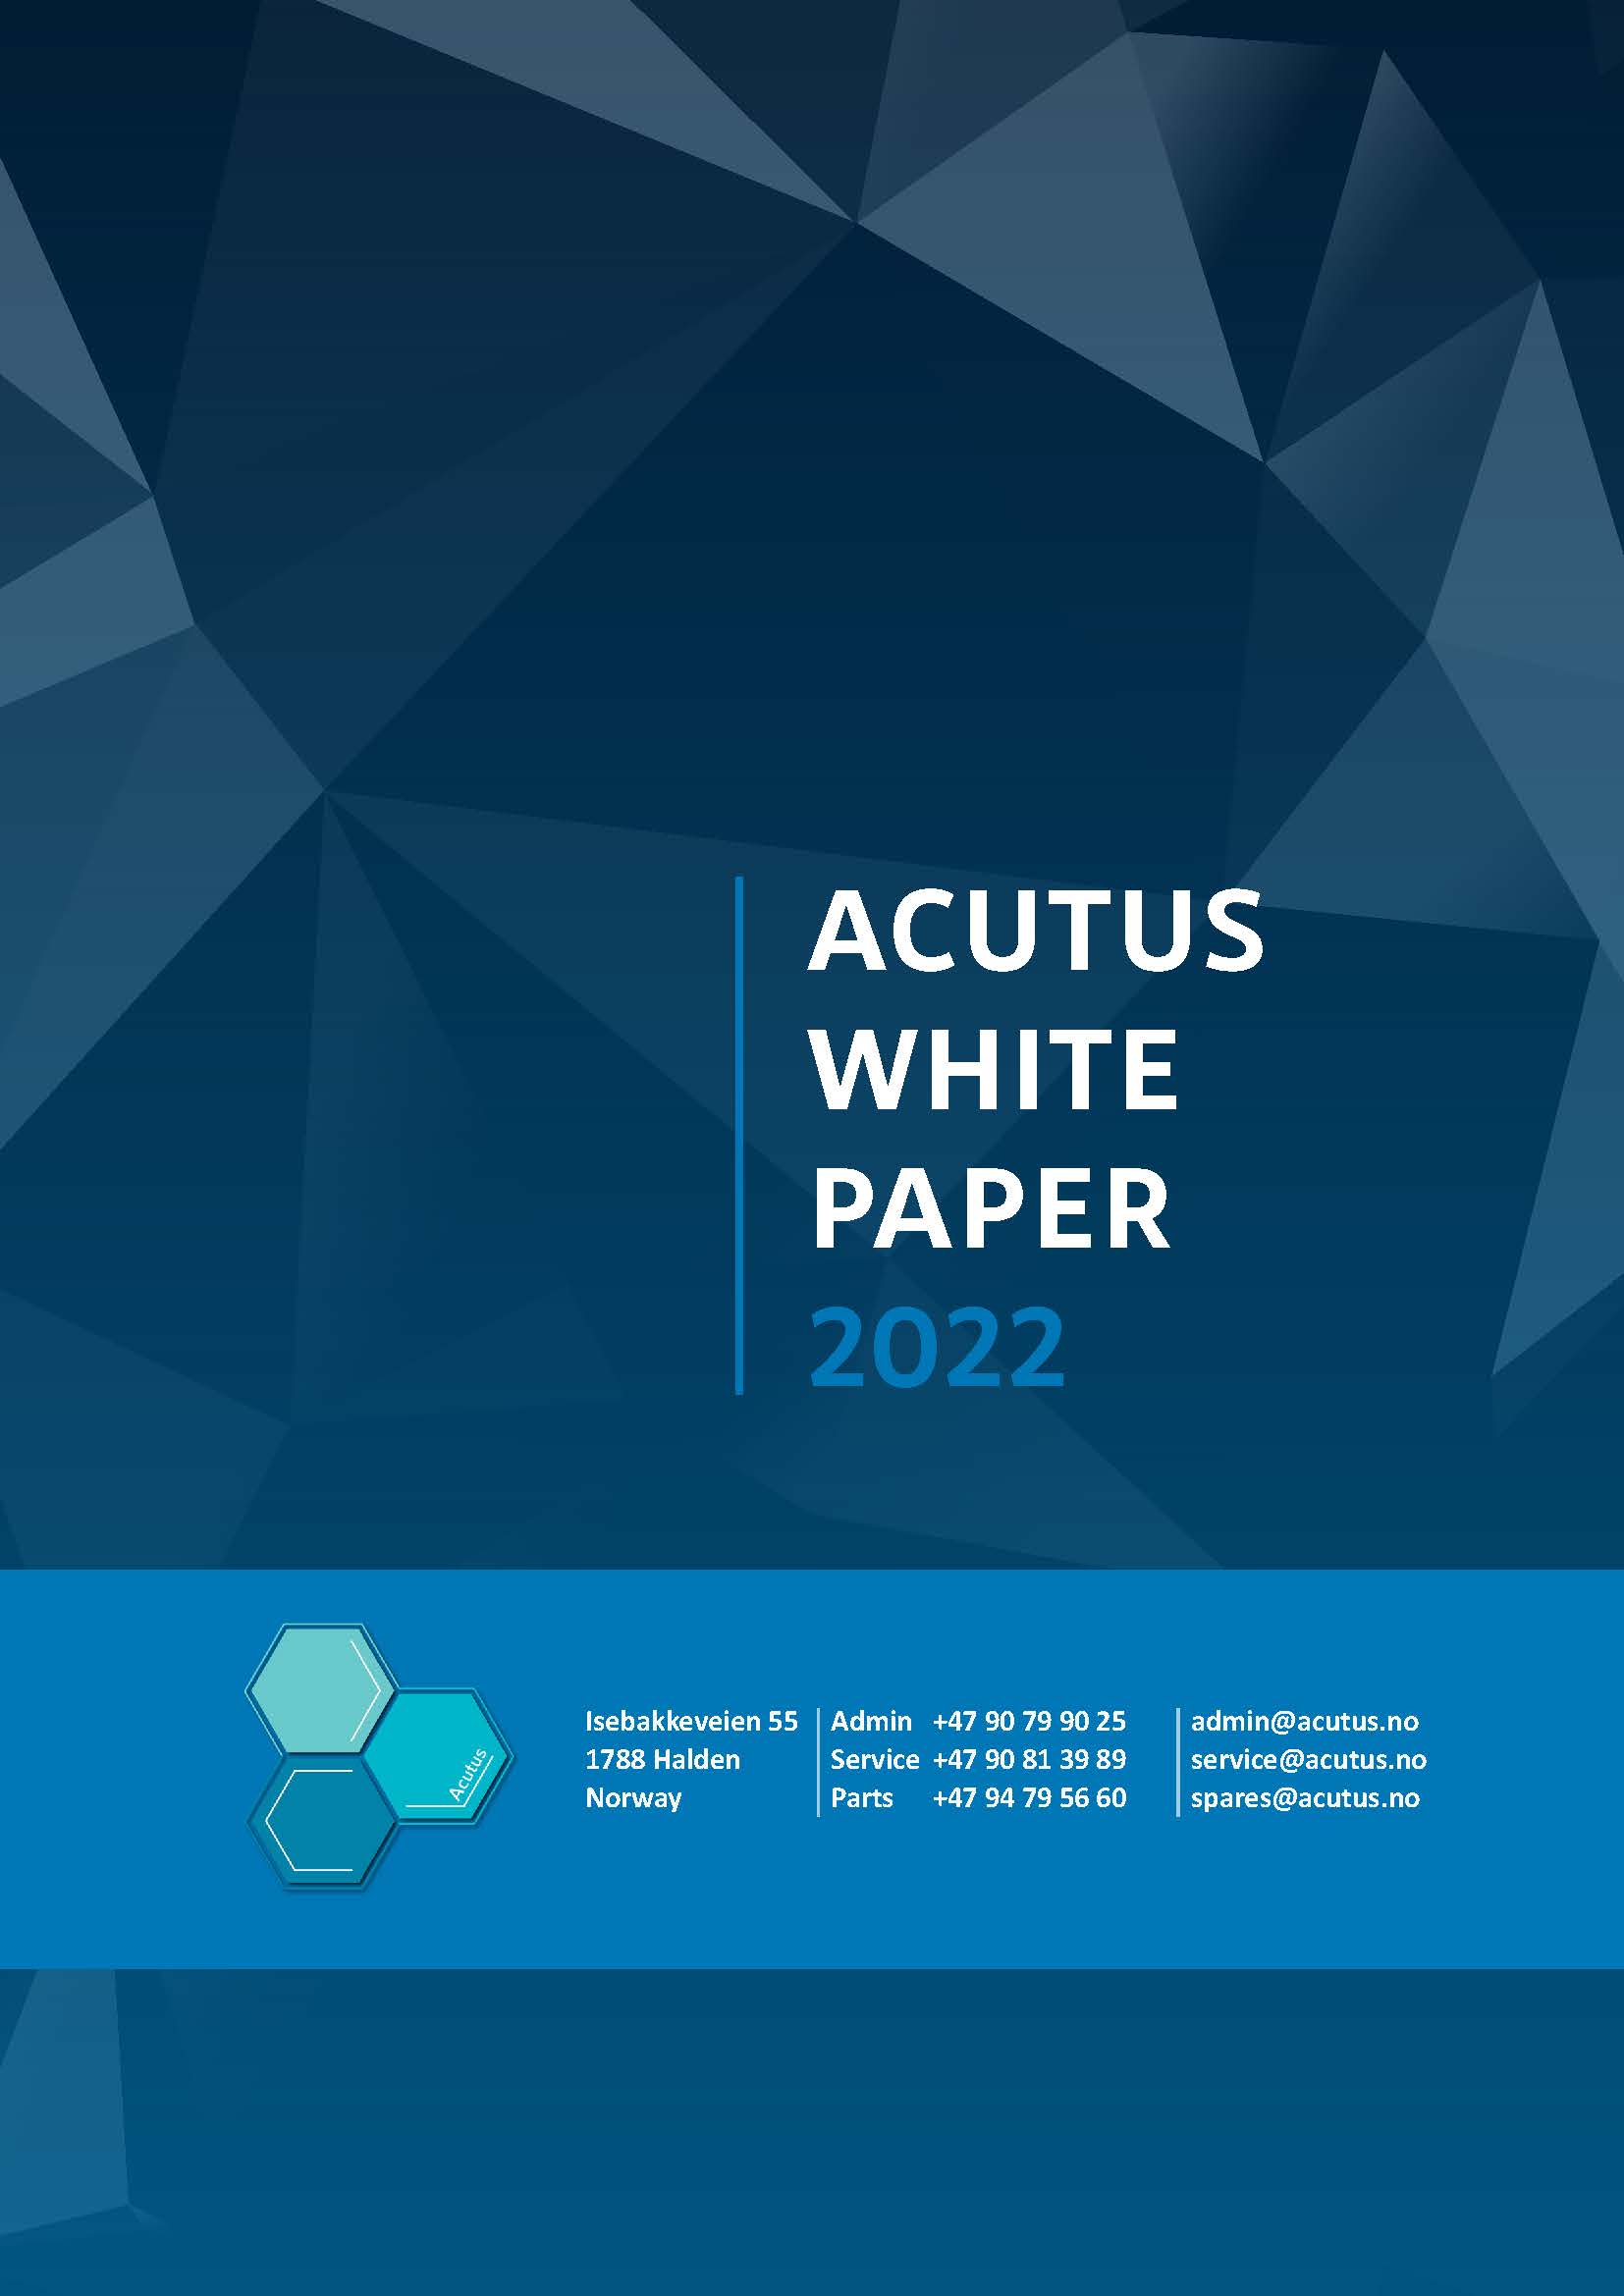 Acutus White Paper Download Material